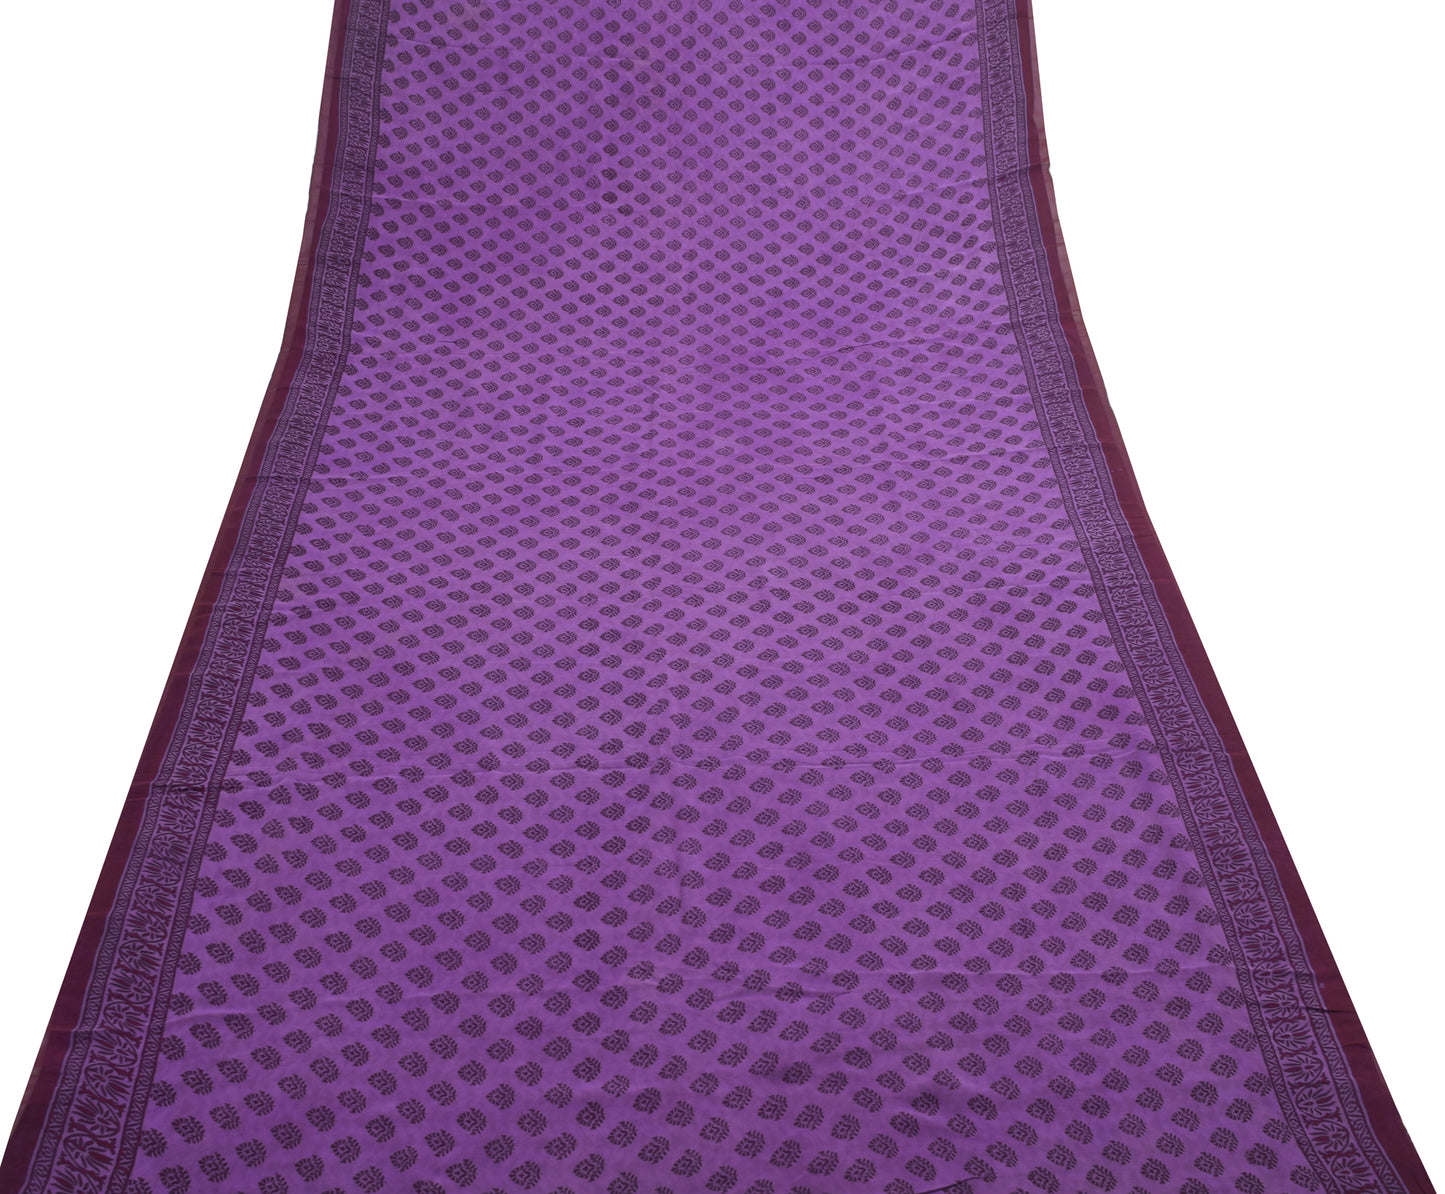 Sushila Vintage Purple Floral Saree 100%Pure Georgette Silk Printed Craft Fabric